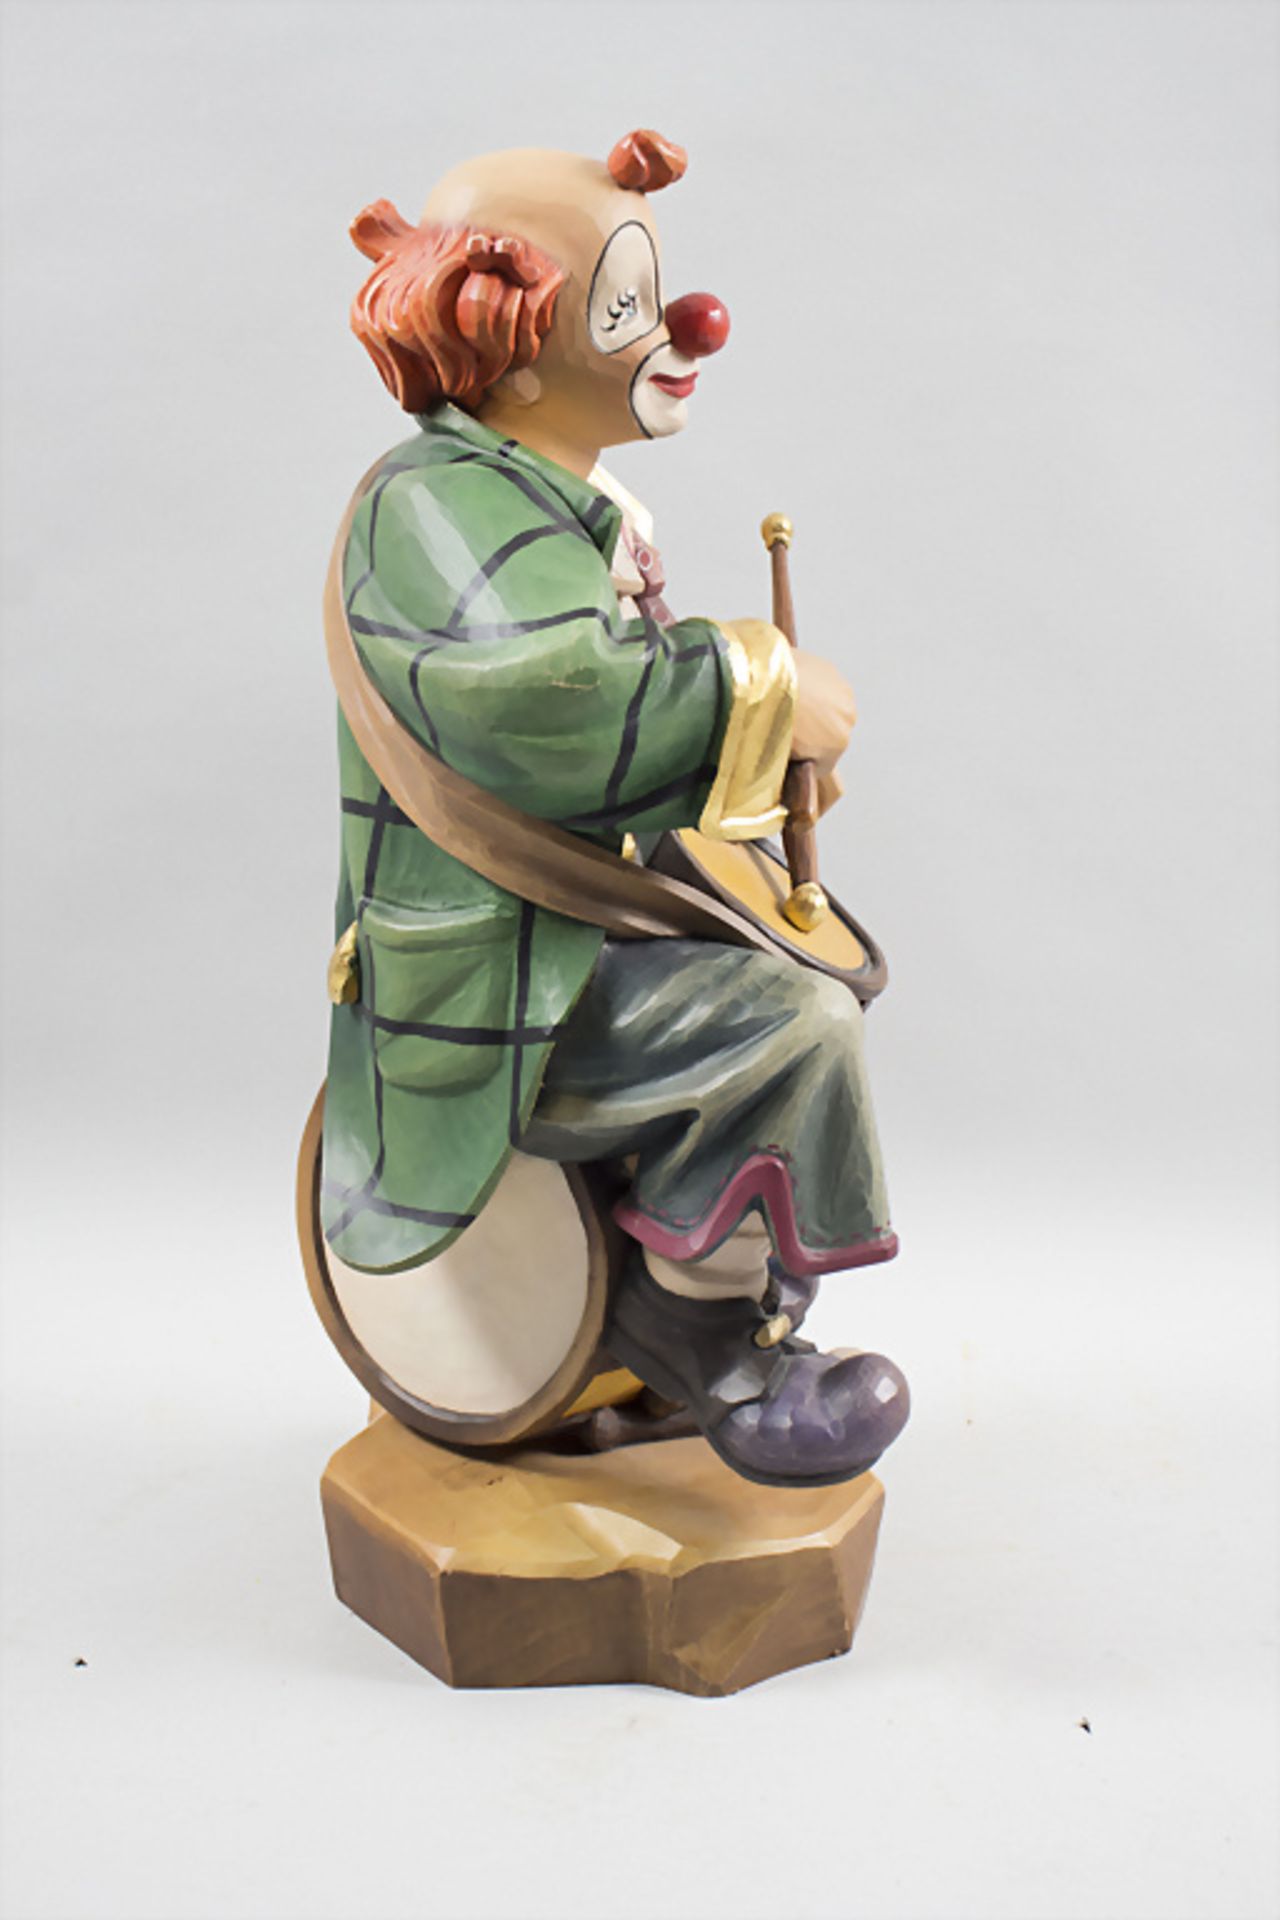 Holzskulptur 'Clown mit Trommel' / A wooden sculpture of a clown with drum, Oswald Dörr, 20. Jh. - Image 5 of 6